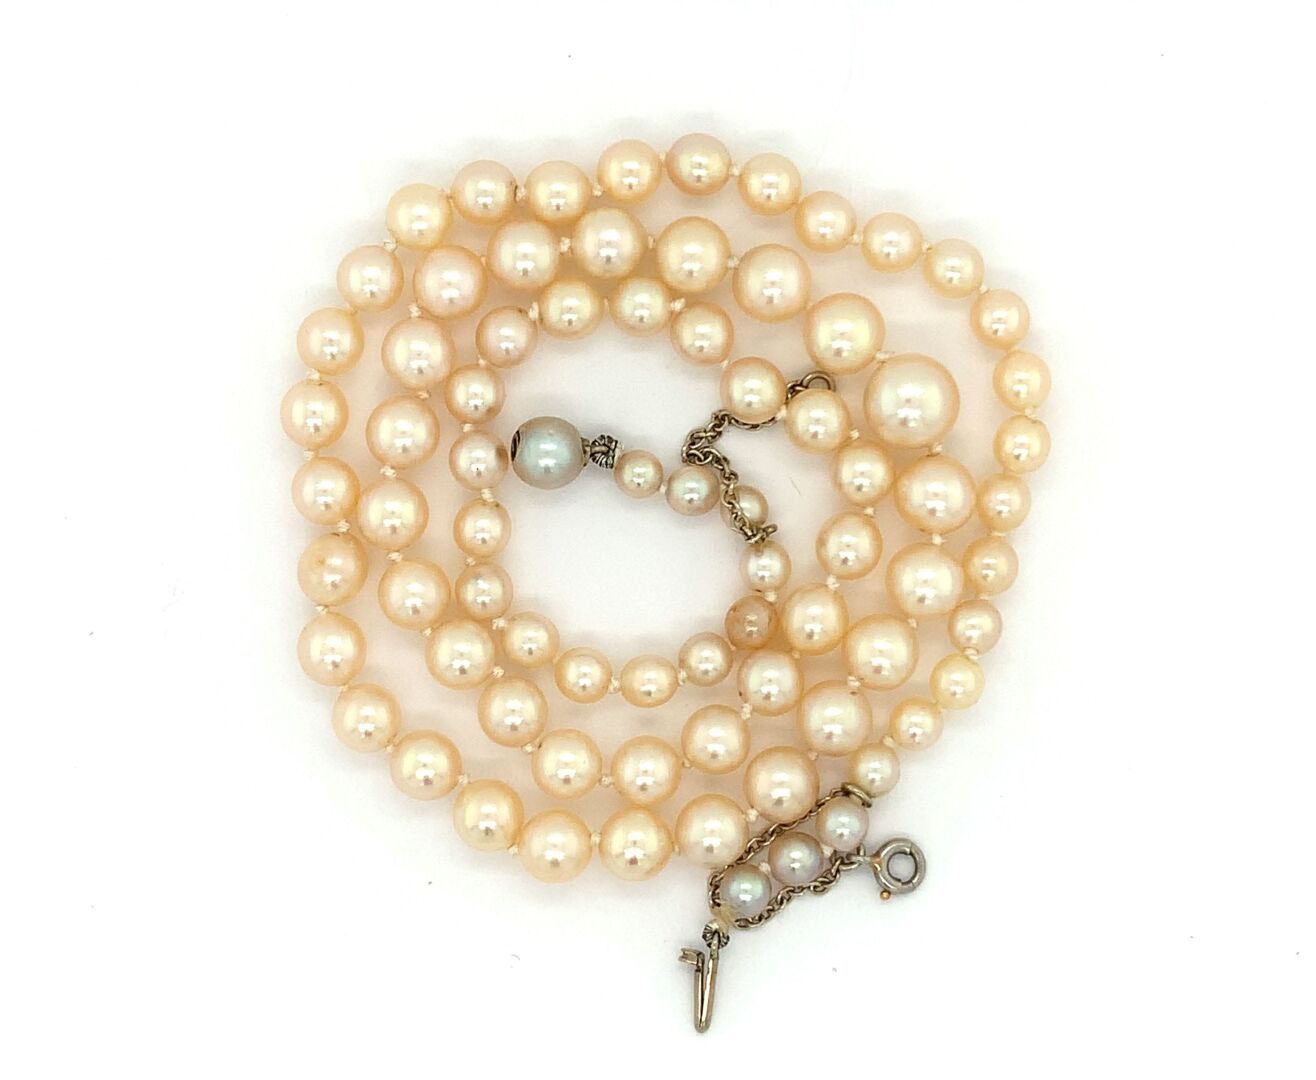 COLLIER DE PERLES à un rang 珍珠项链，一排珍珠。带安全链的棘轮扣。
长度：48厘米